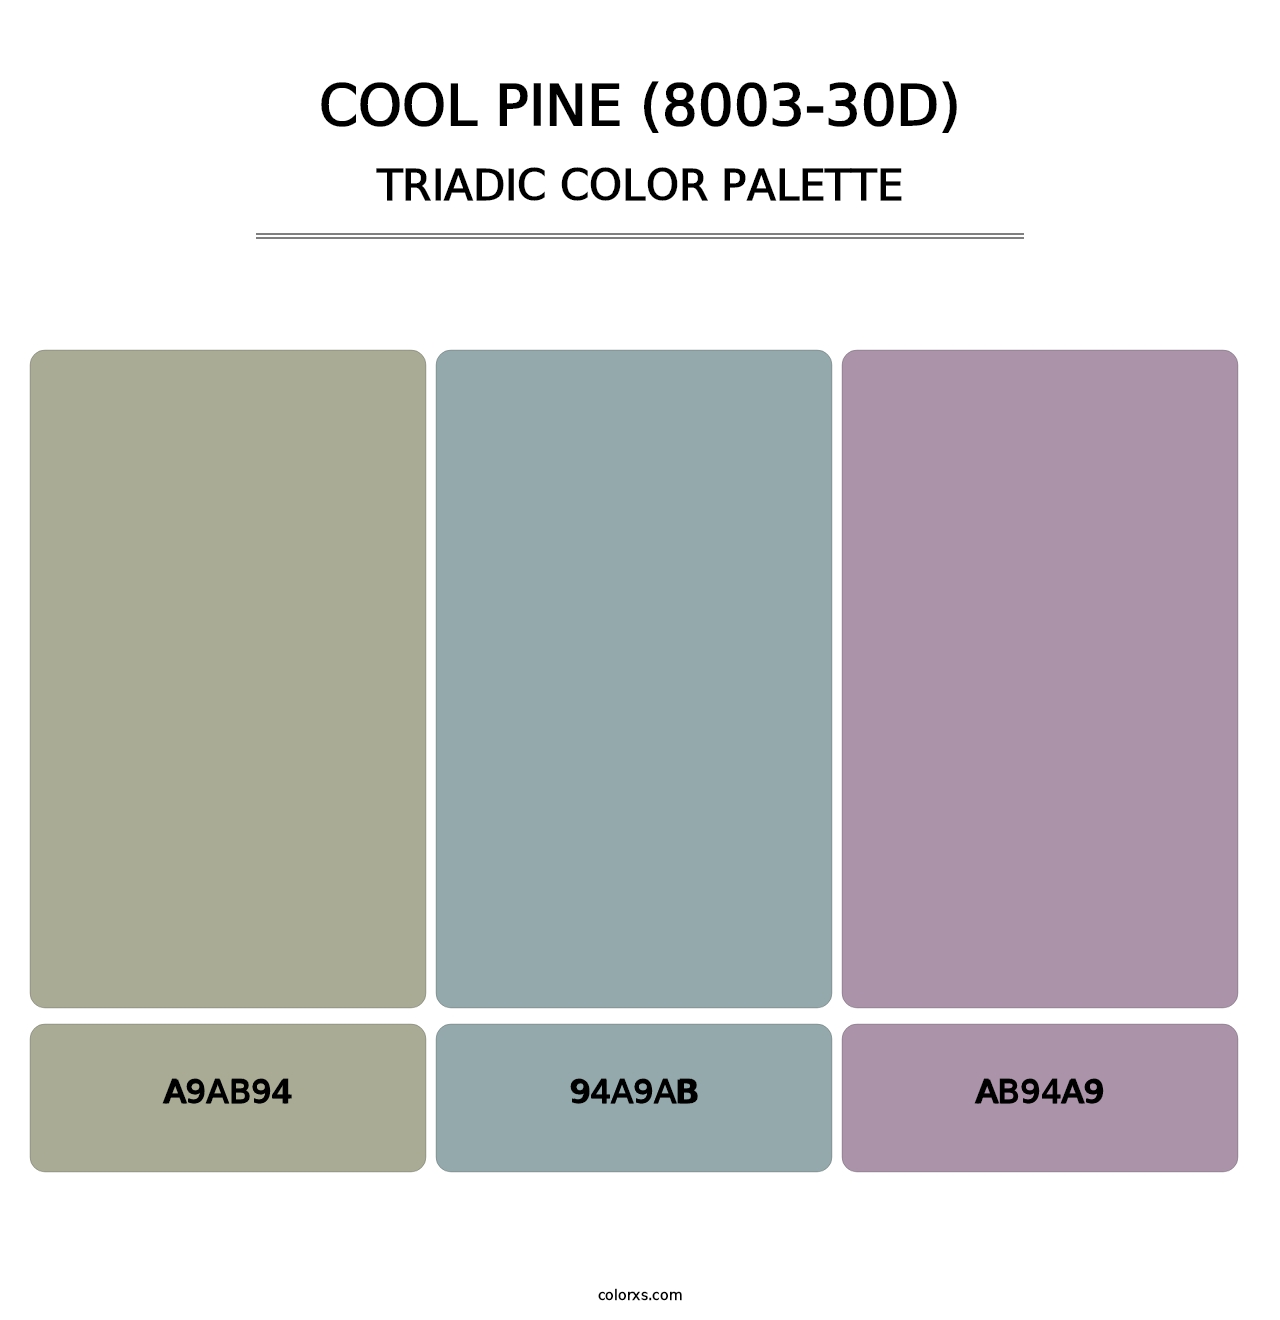 Cool Pine (8003-30D) - Triadic Color Palette